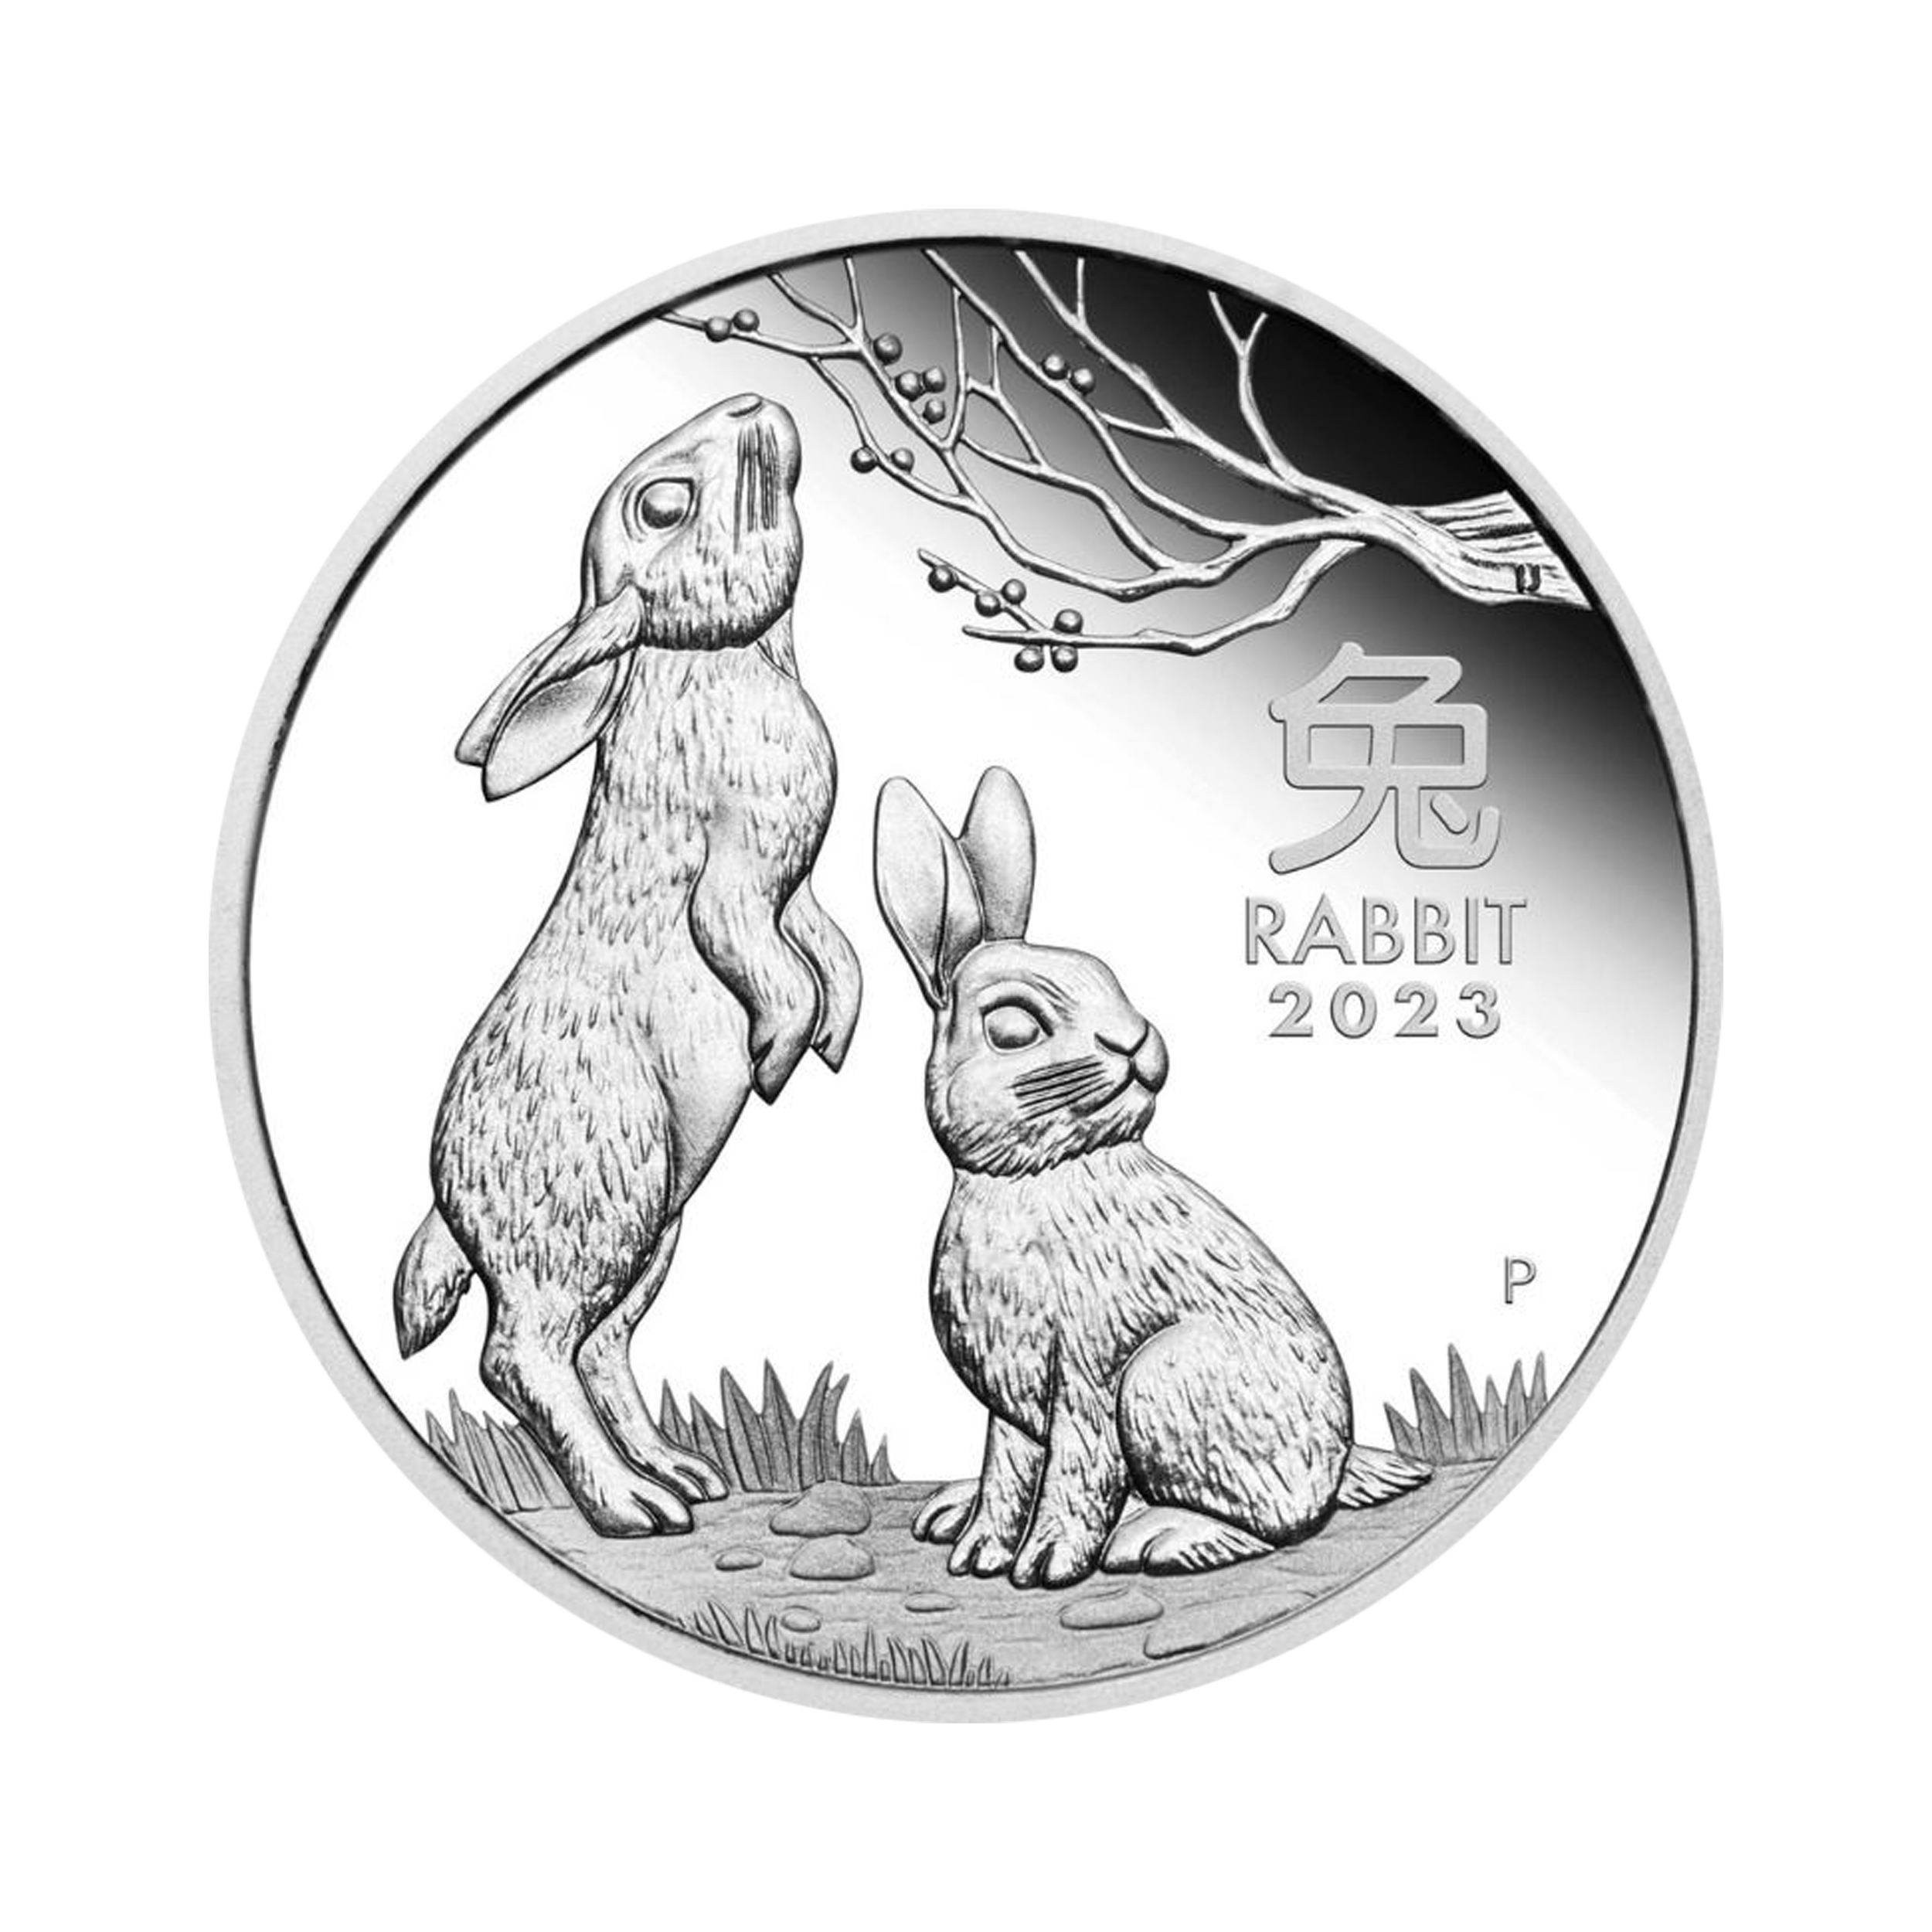 1 troy ounce silver coin Lunar 2023 proof